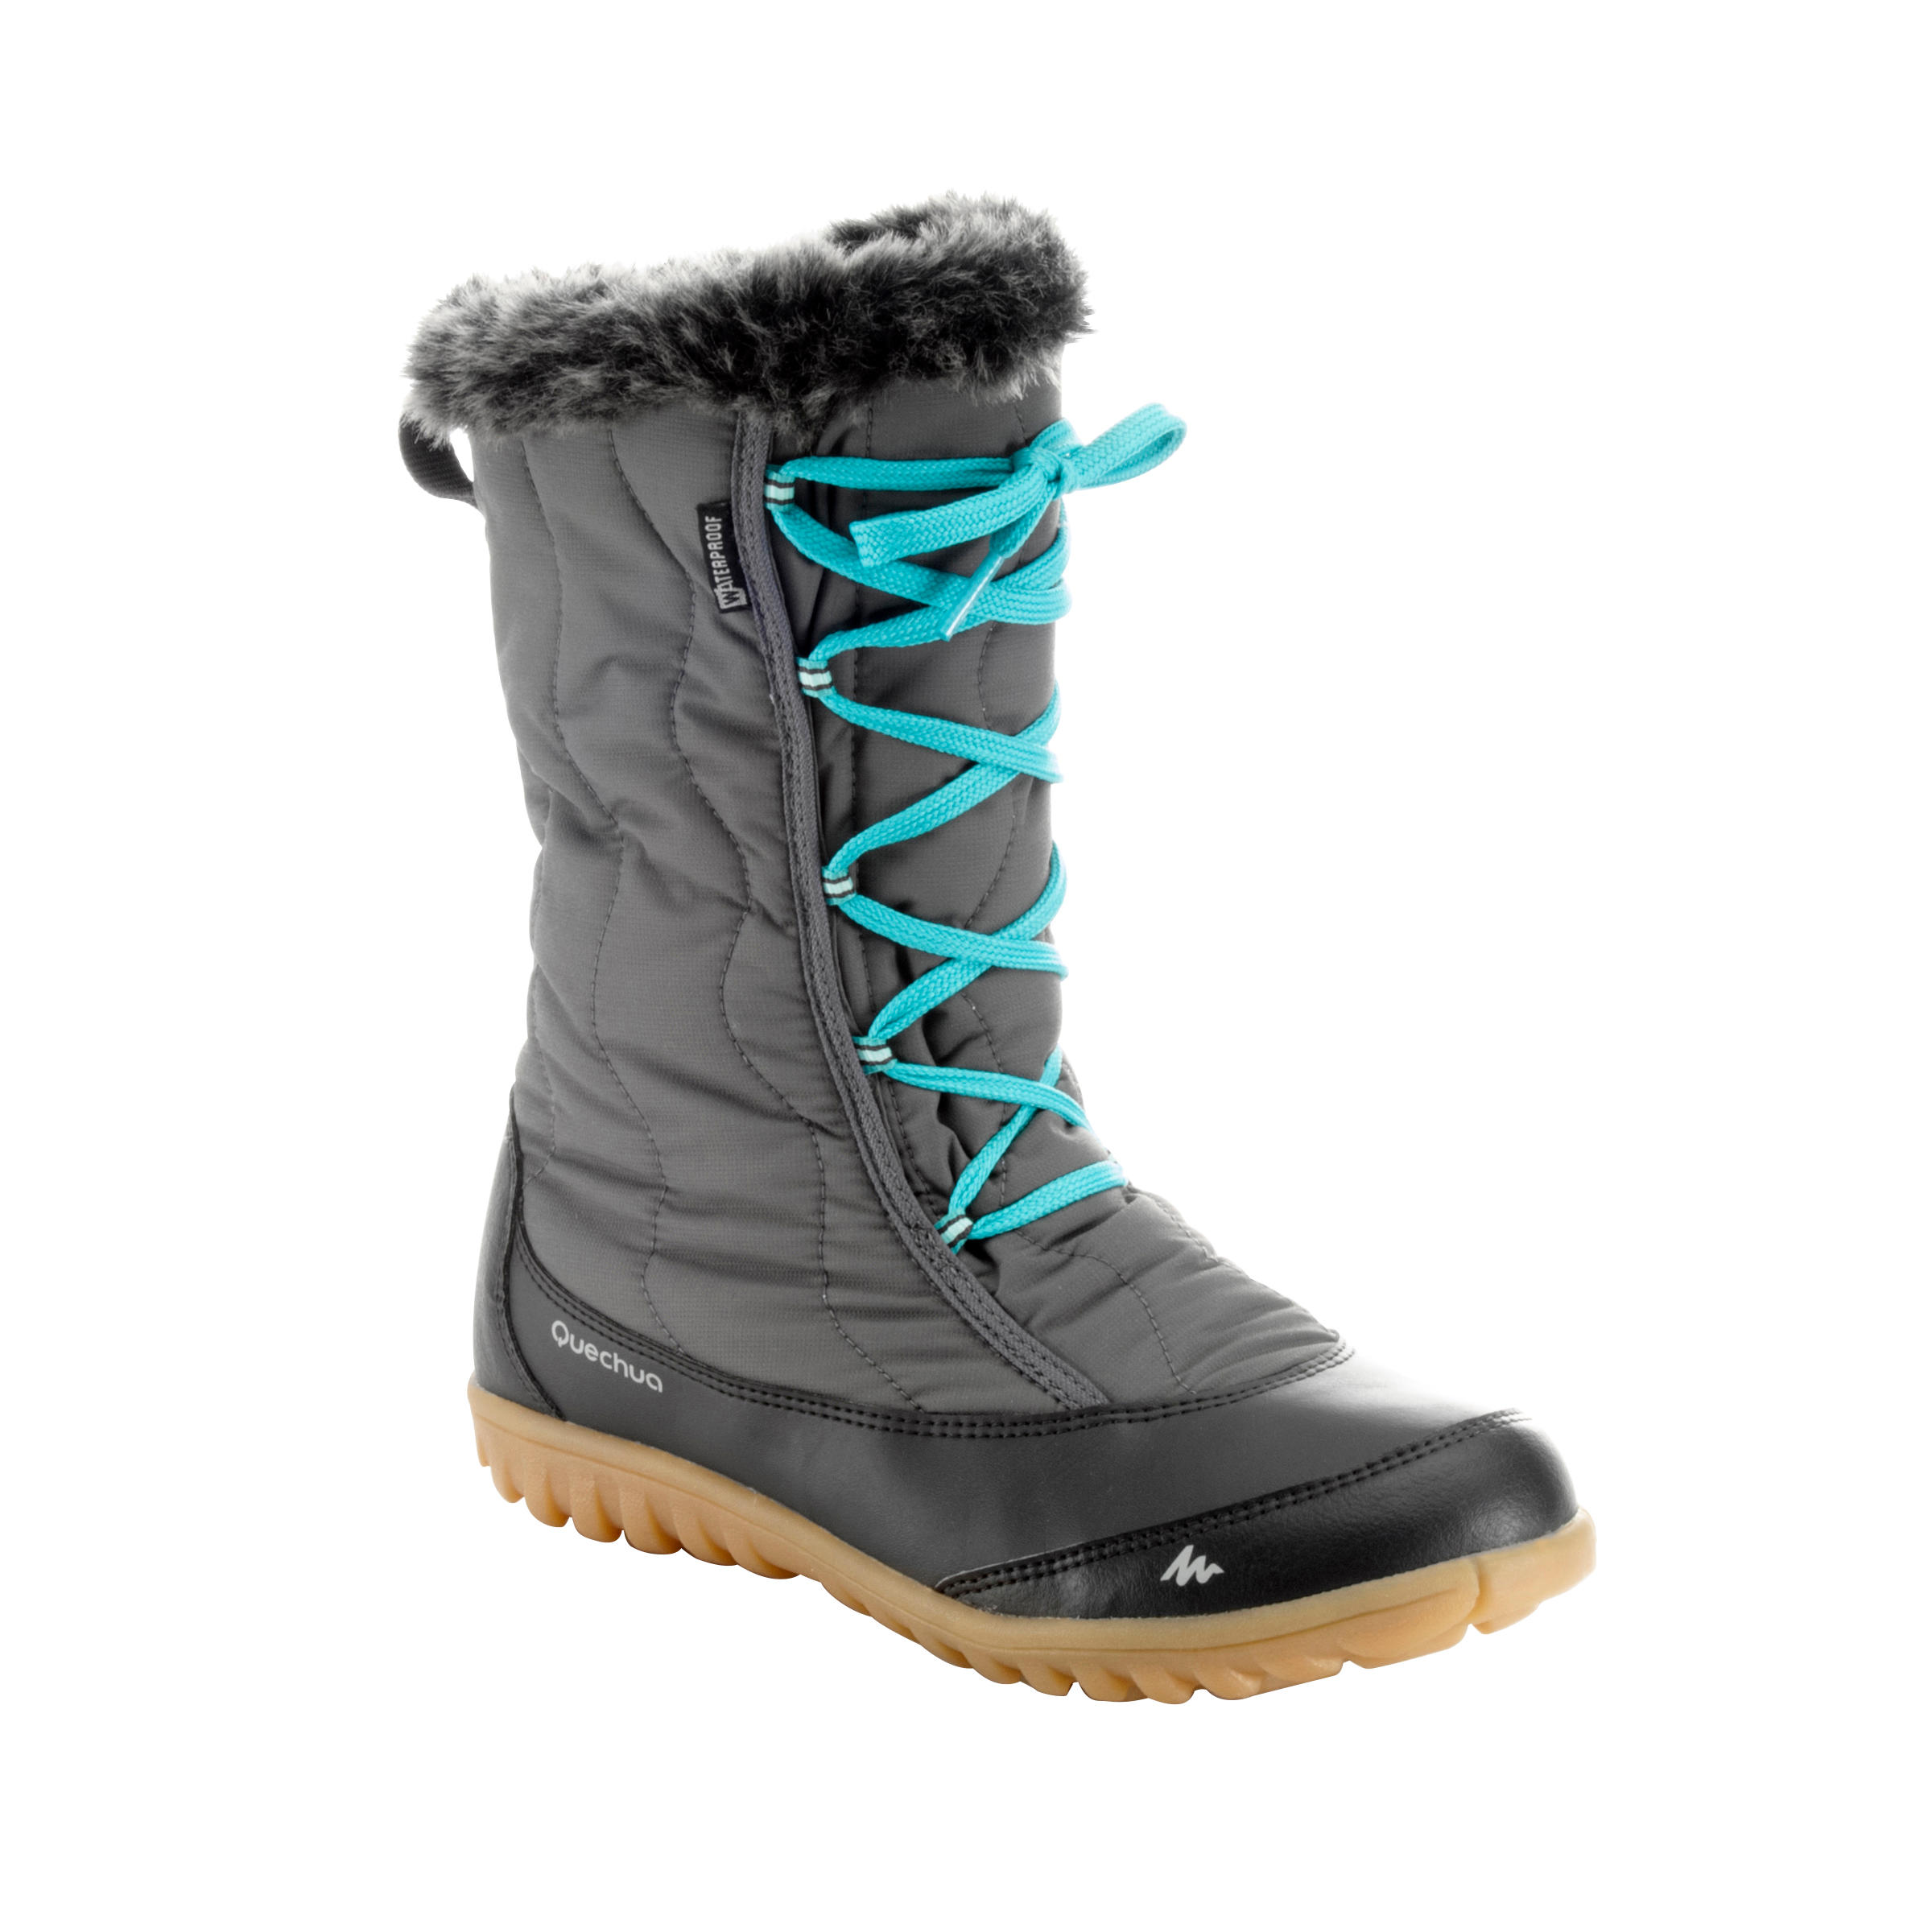 QUECHUA SH900 Women's Warm and Waterproof Snow Hiking Boots - Grey